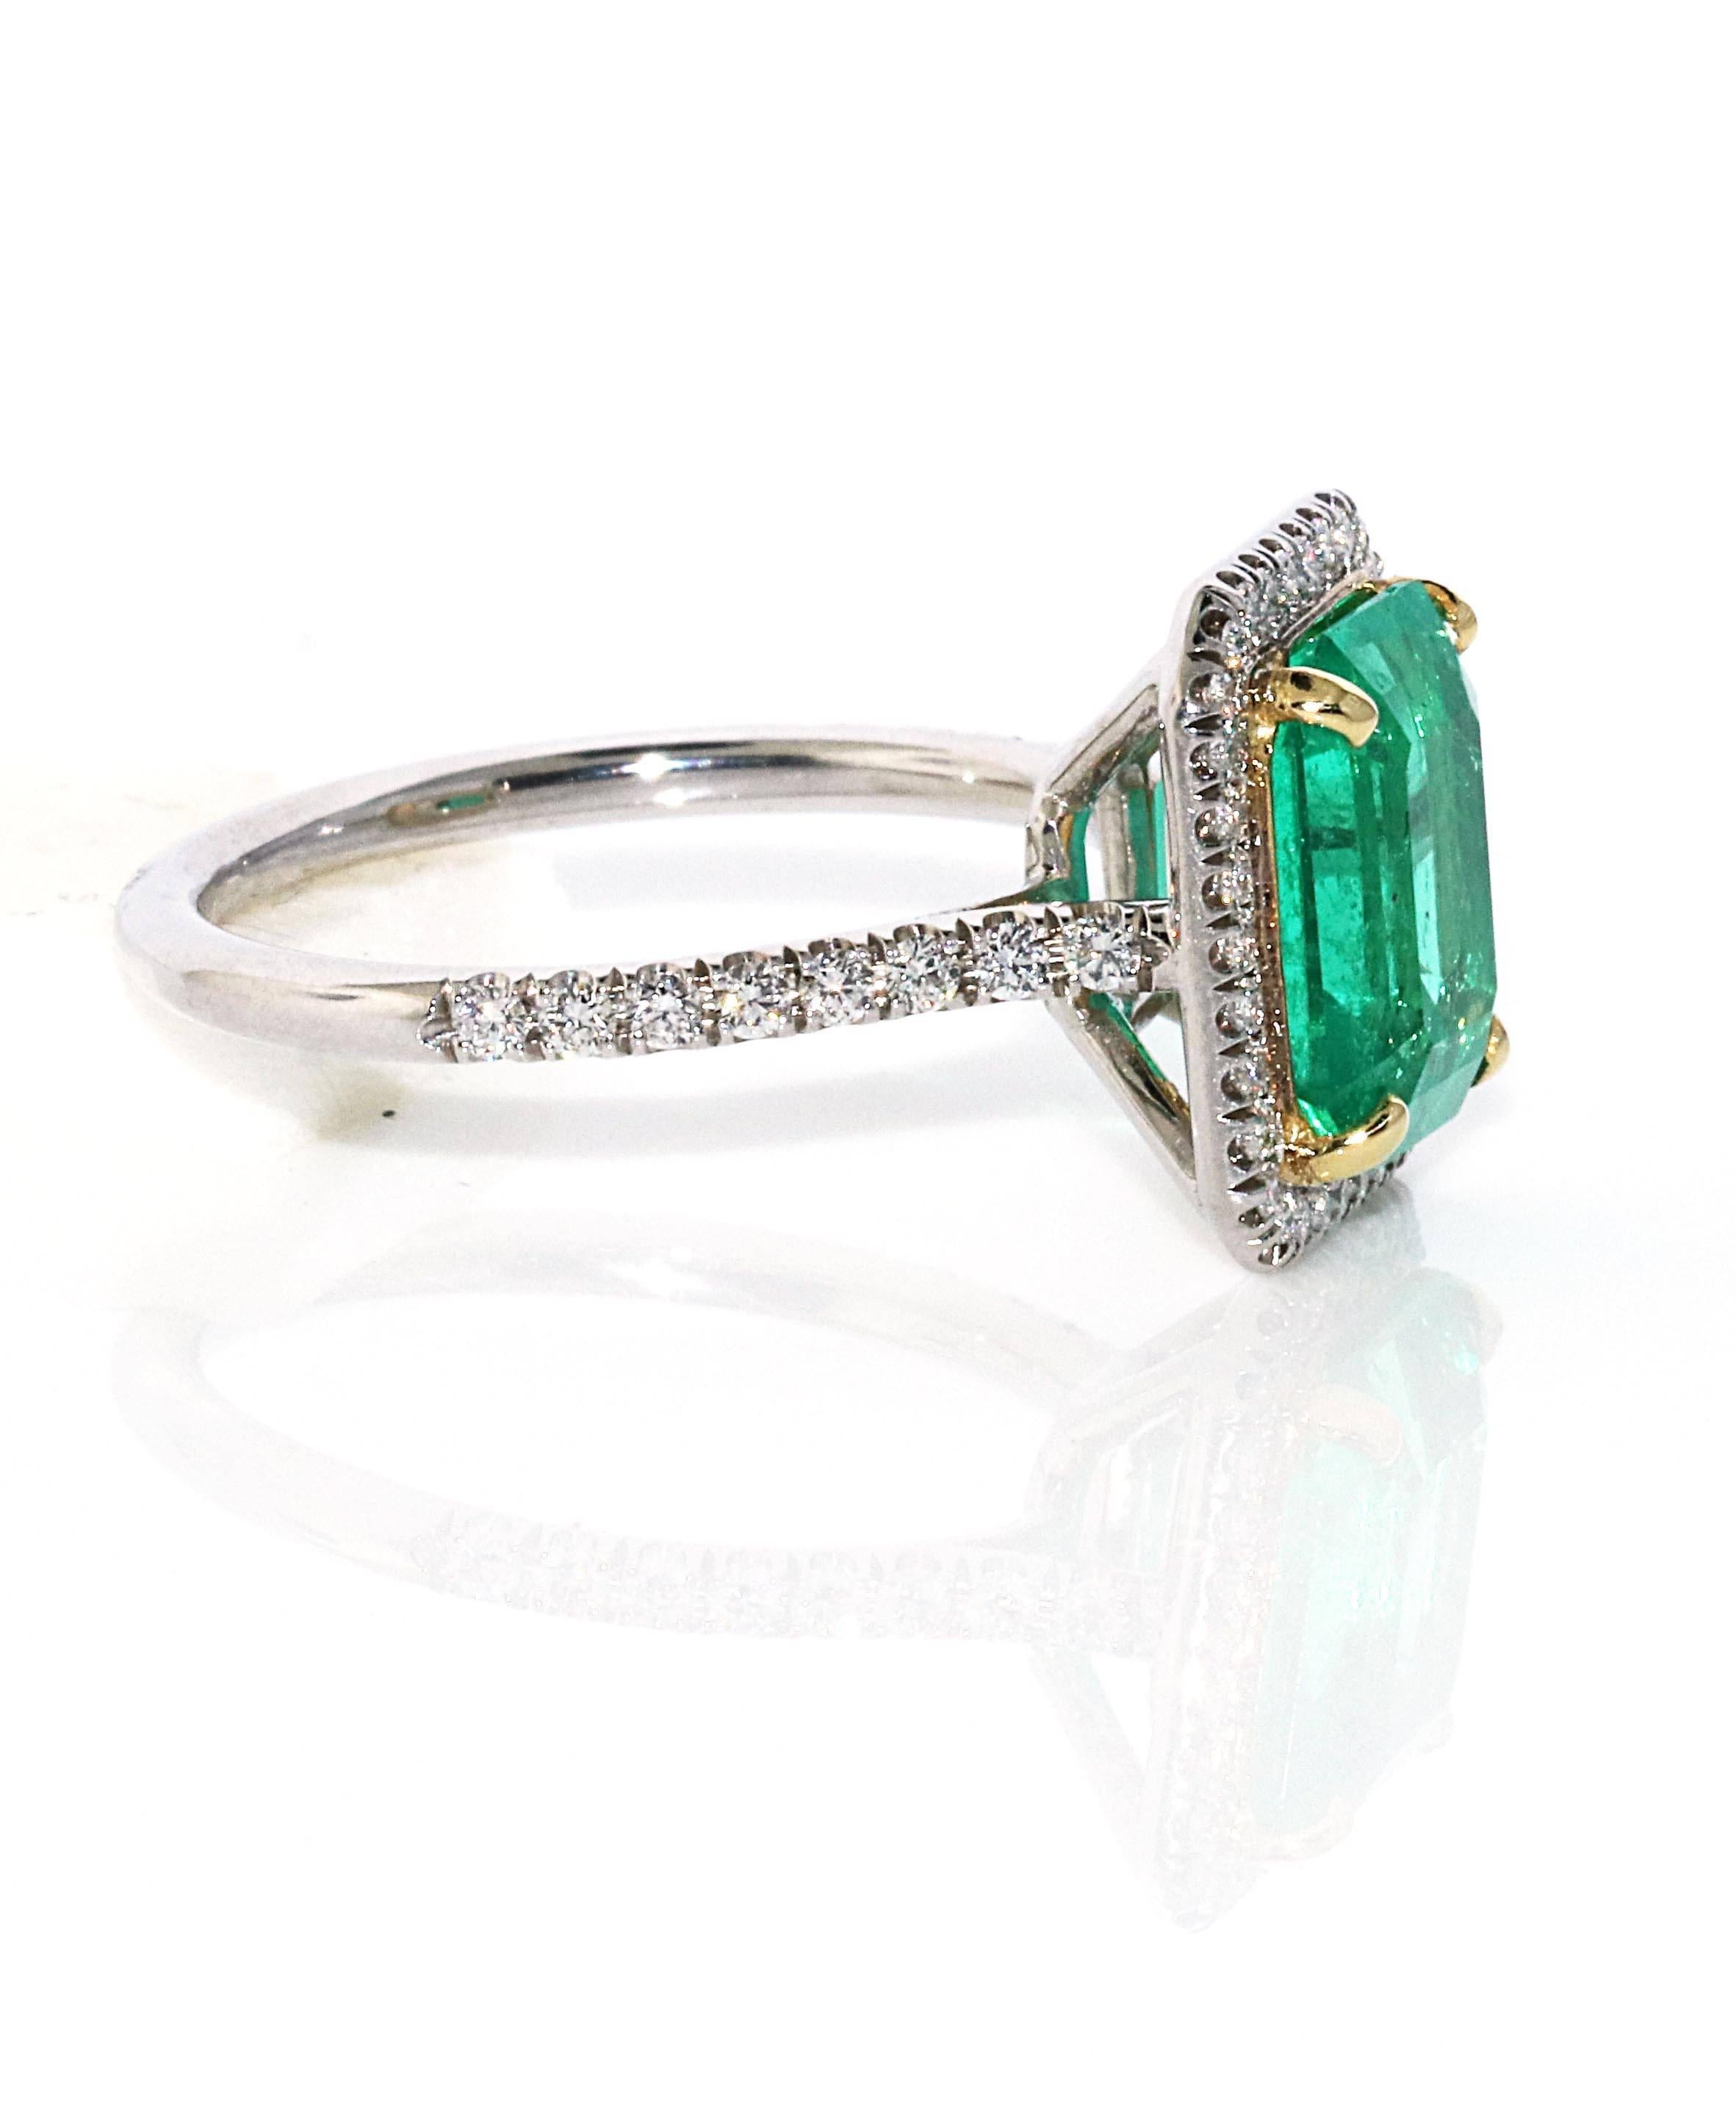 Modern 3.39 Carat Colombian Minor Emerald Cut Emerald and Diamond Ring, GIA Certificate